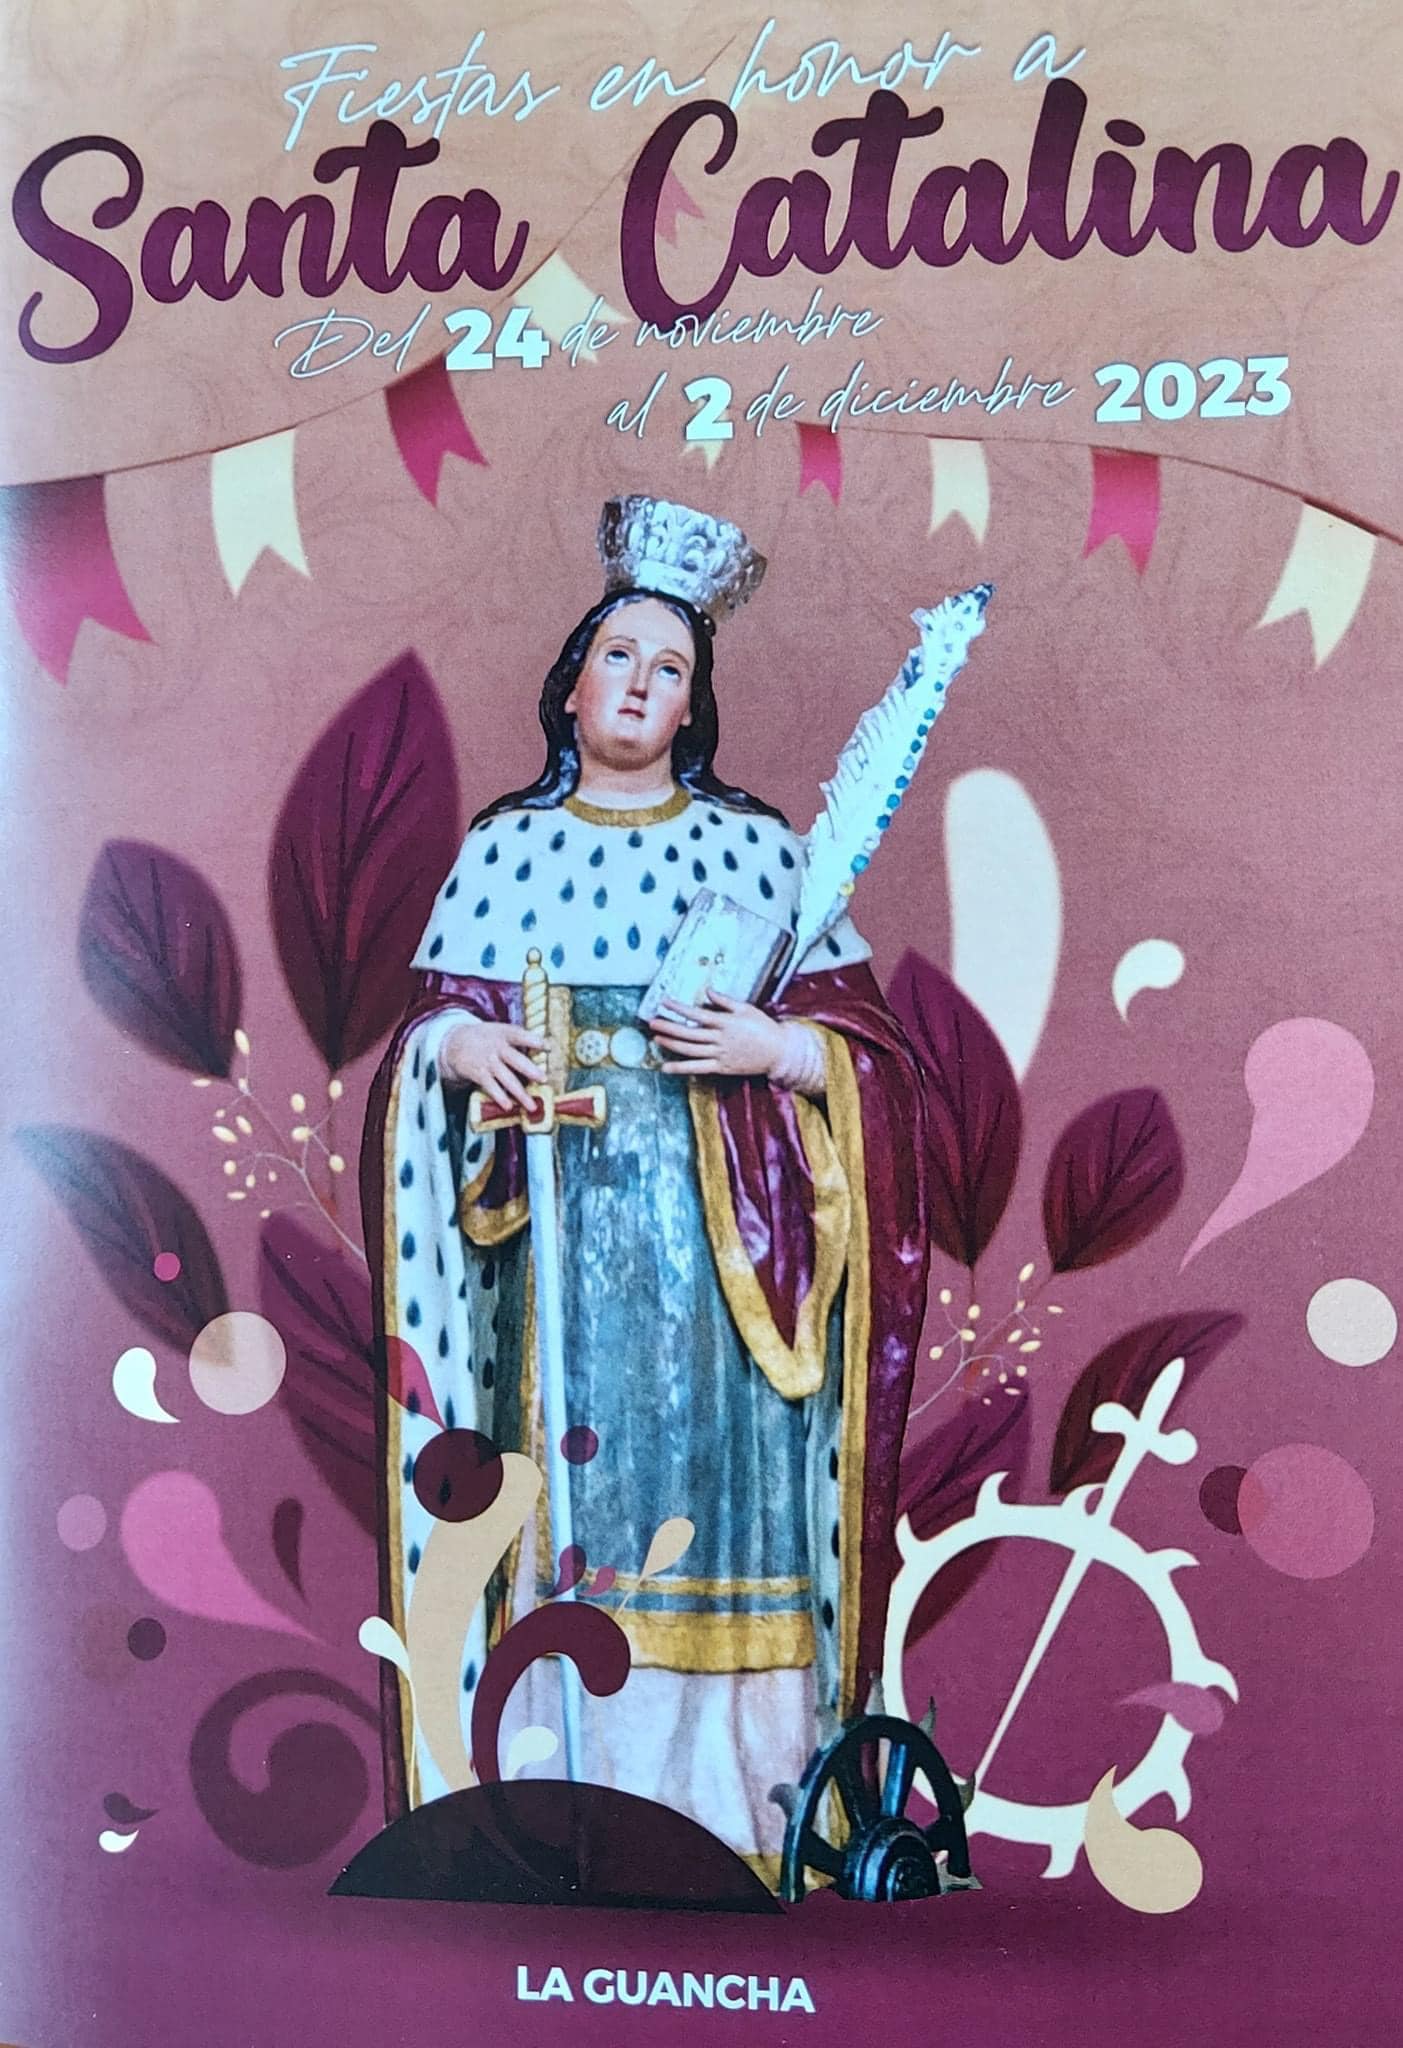 Fiestas de Santa Catalina en La Guancha 2023. Programación de Fiestas de Santa Catalina en La Guancha, Tenerife